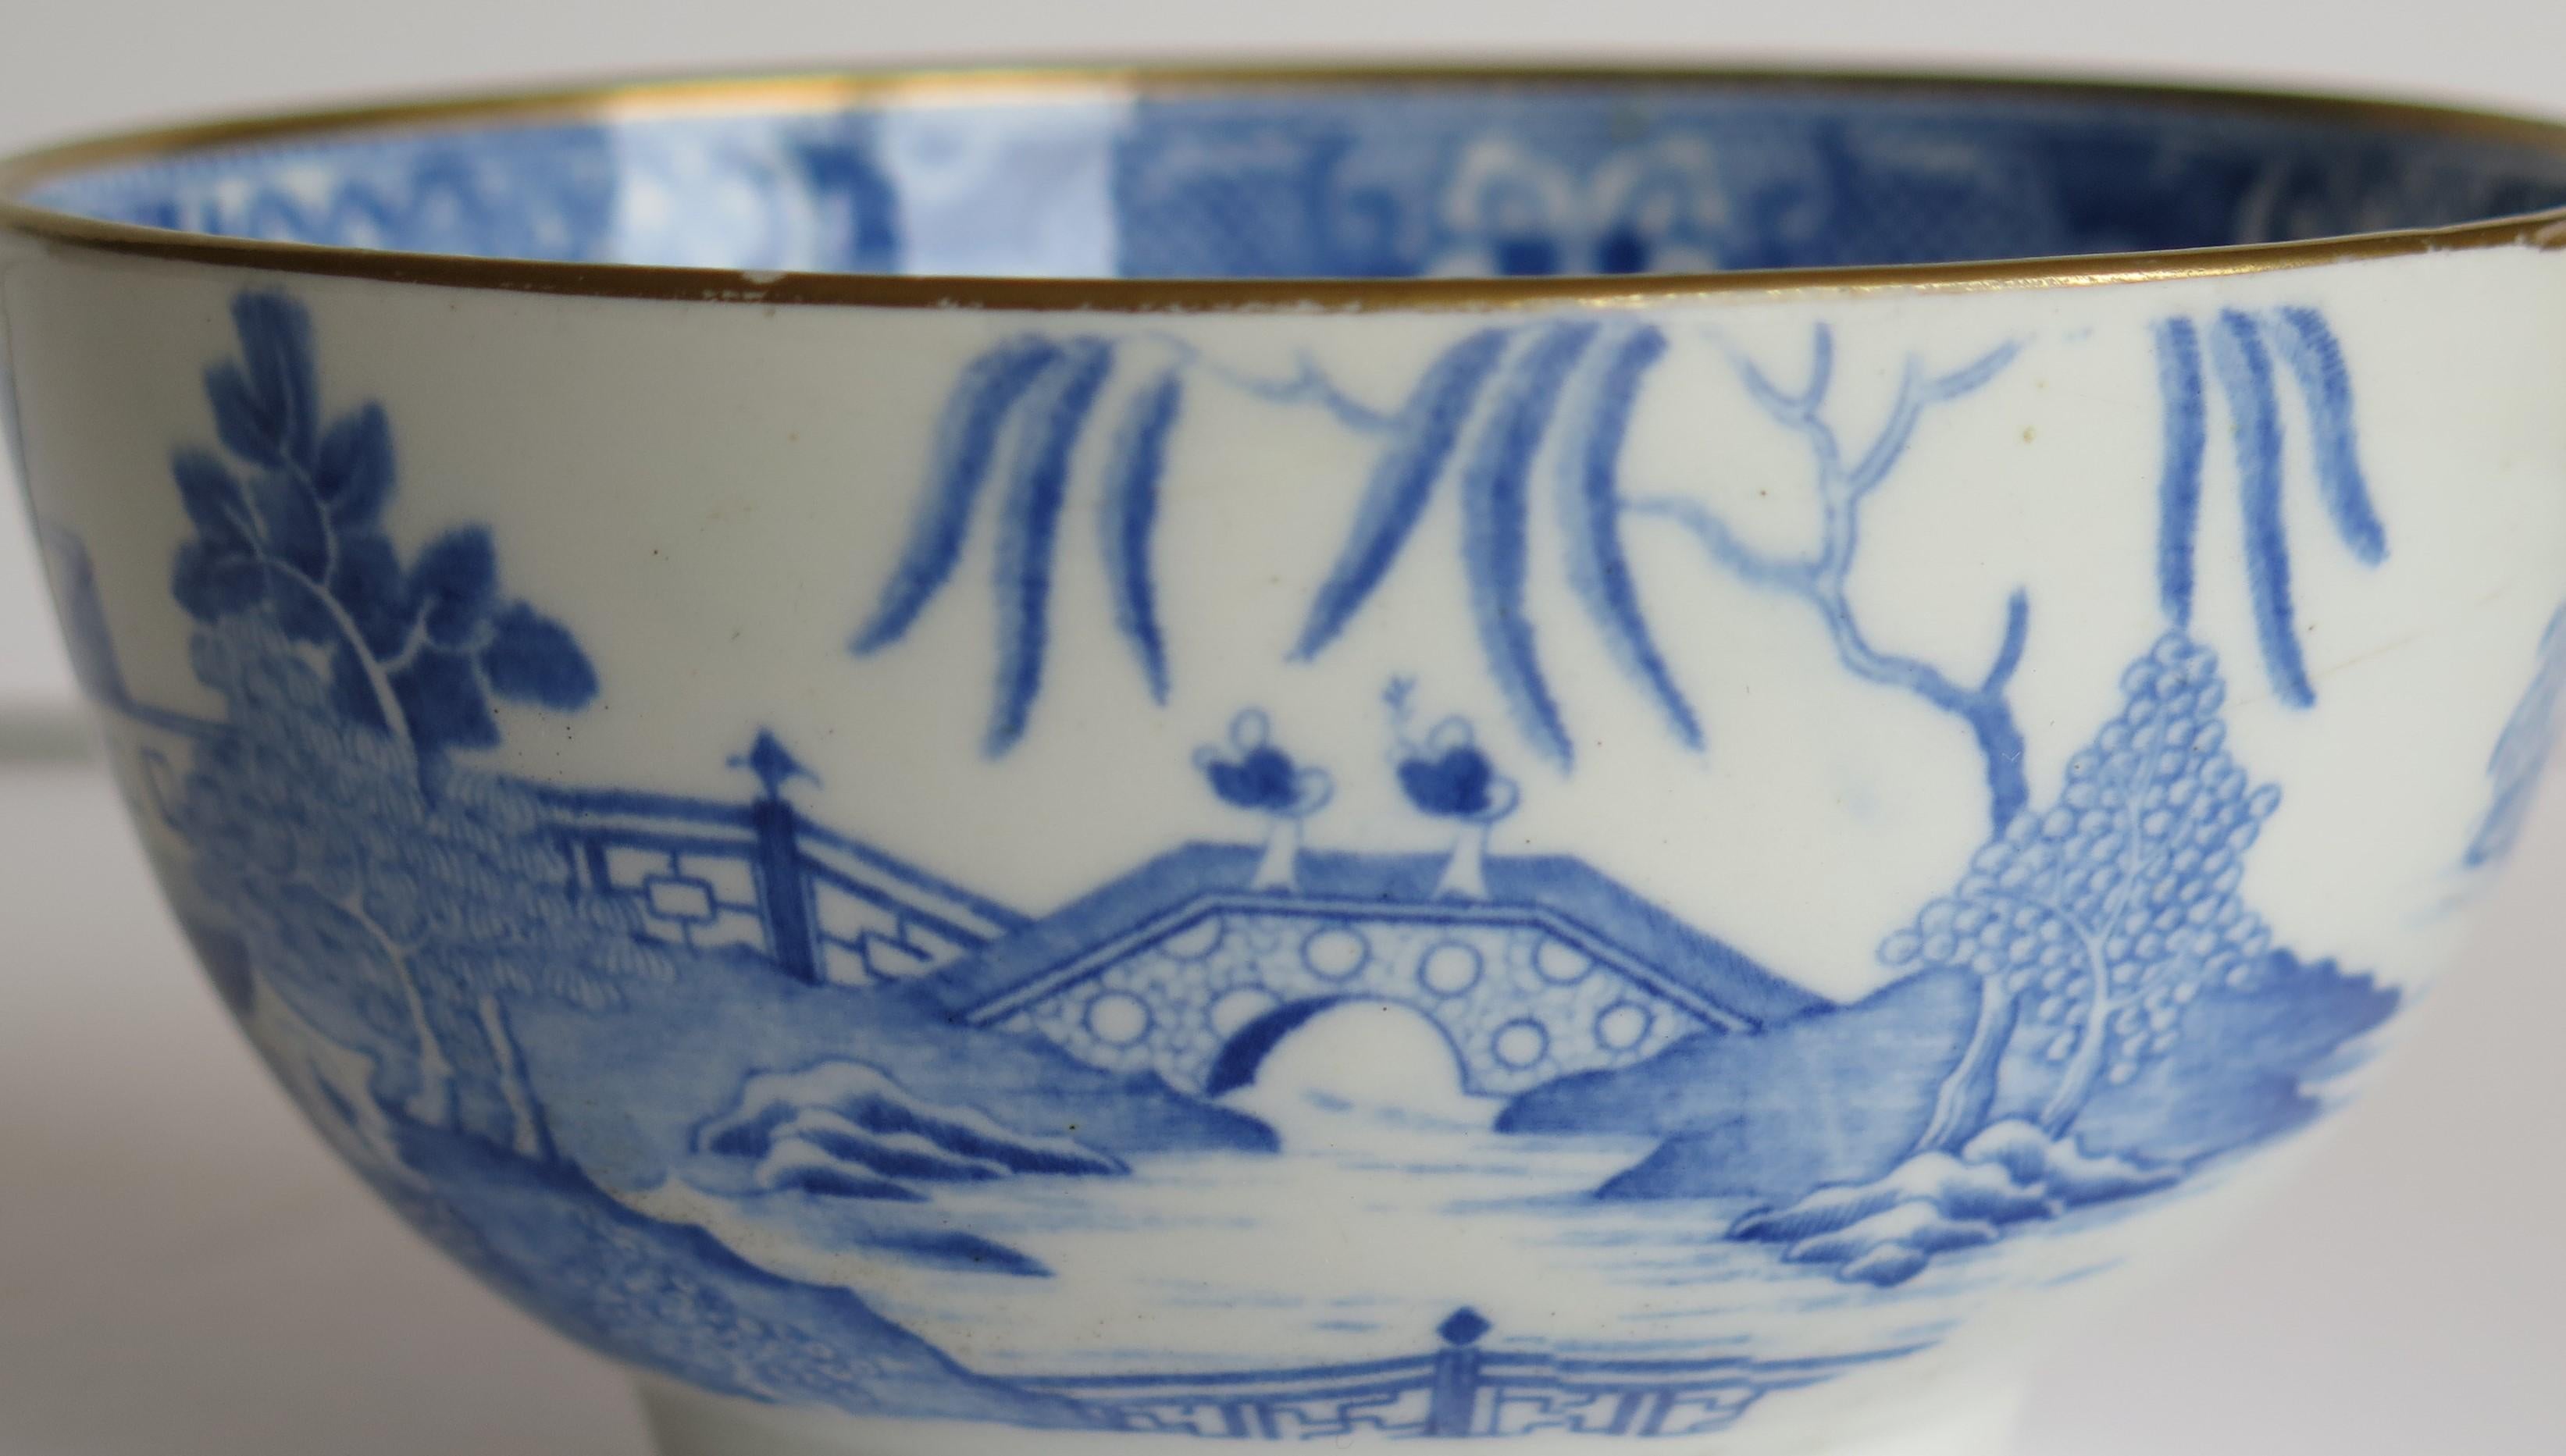 Miles Mason Porcelain Bowl Blue and White Broseley Pattern, English, circa 1805 11